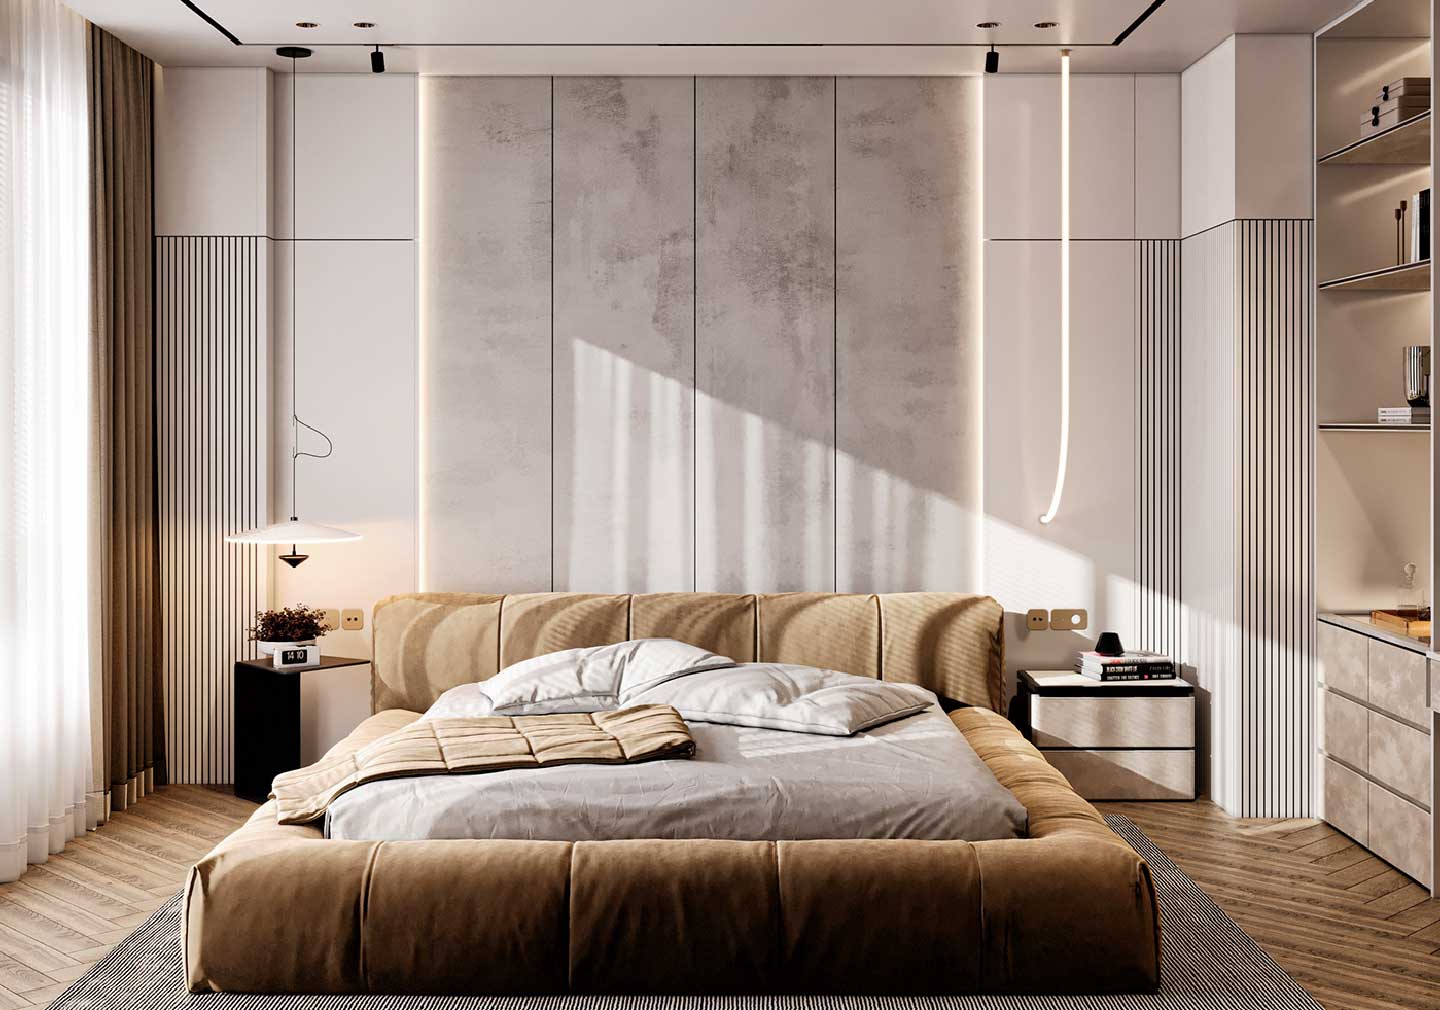 Modern contemporary master bedroom interior designs